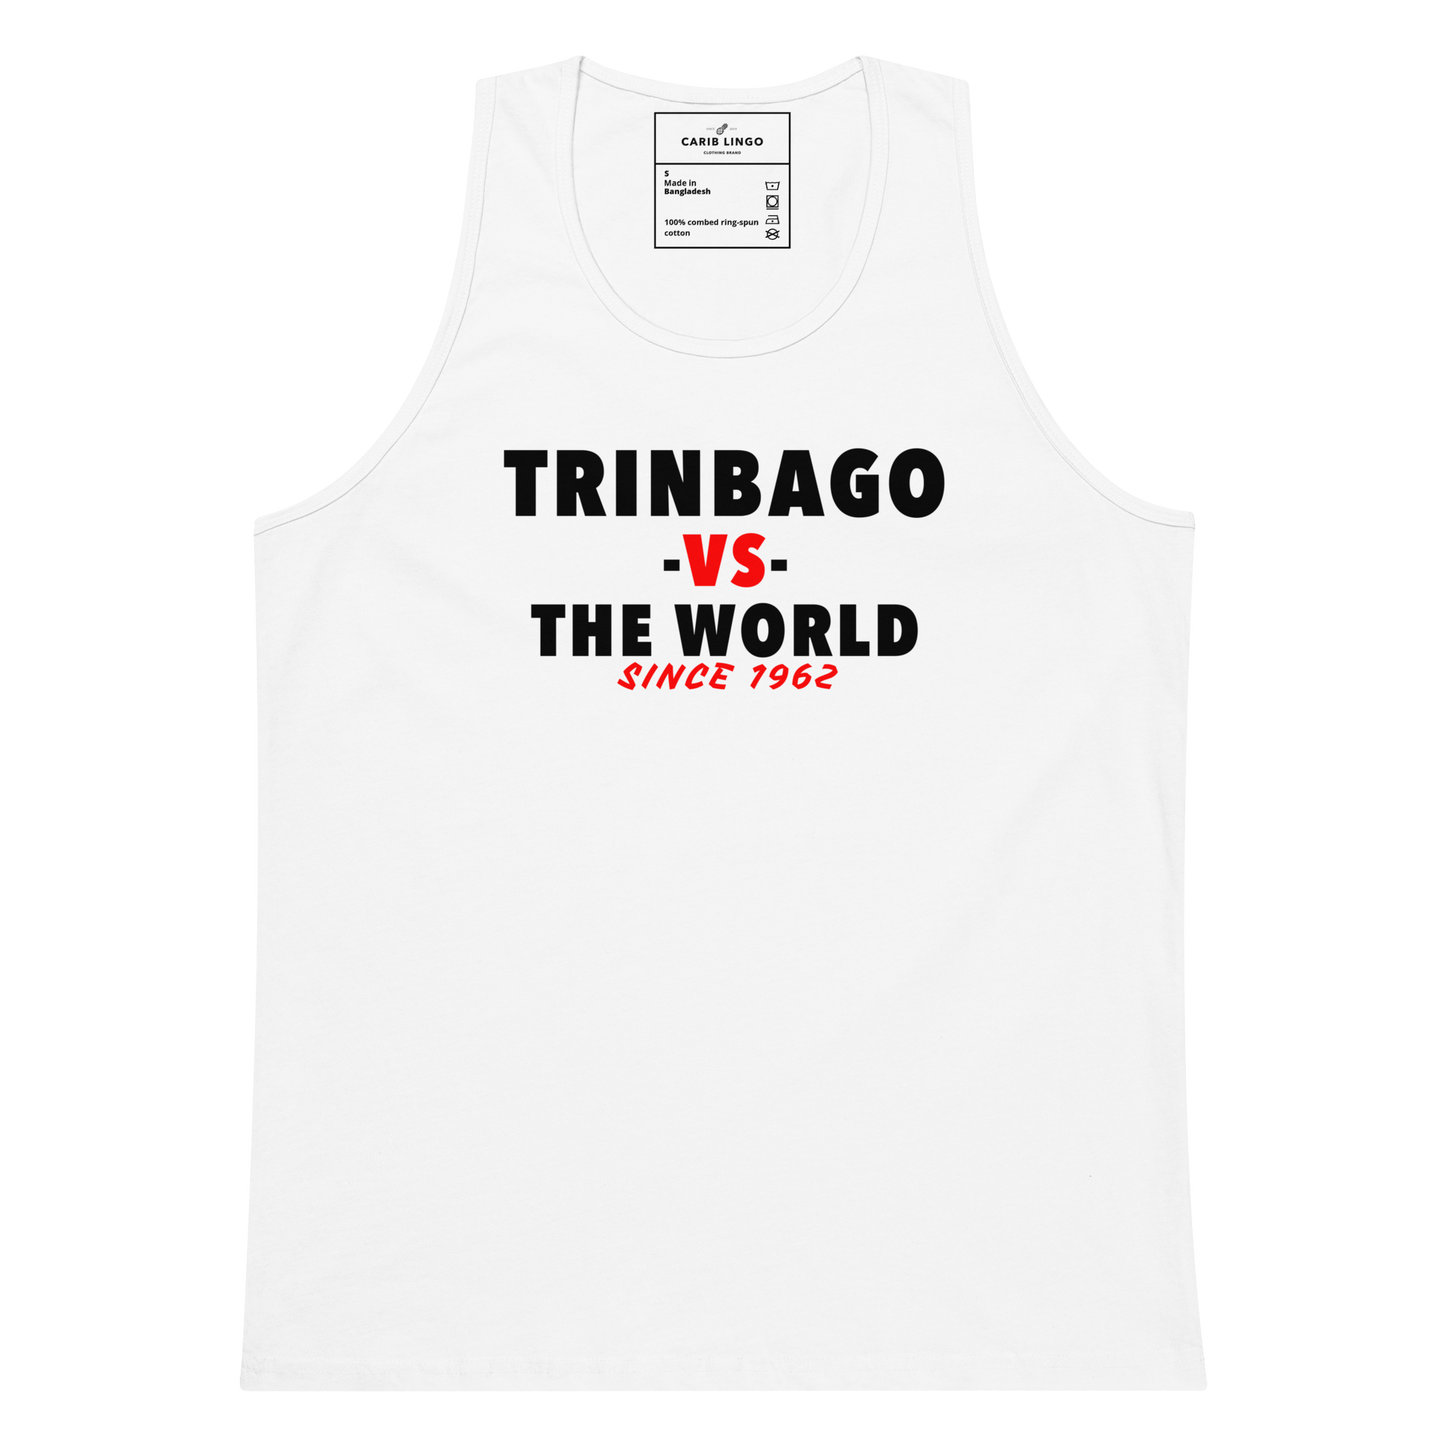 Trinbago -vs- The World Men’s premium tank top